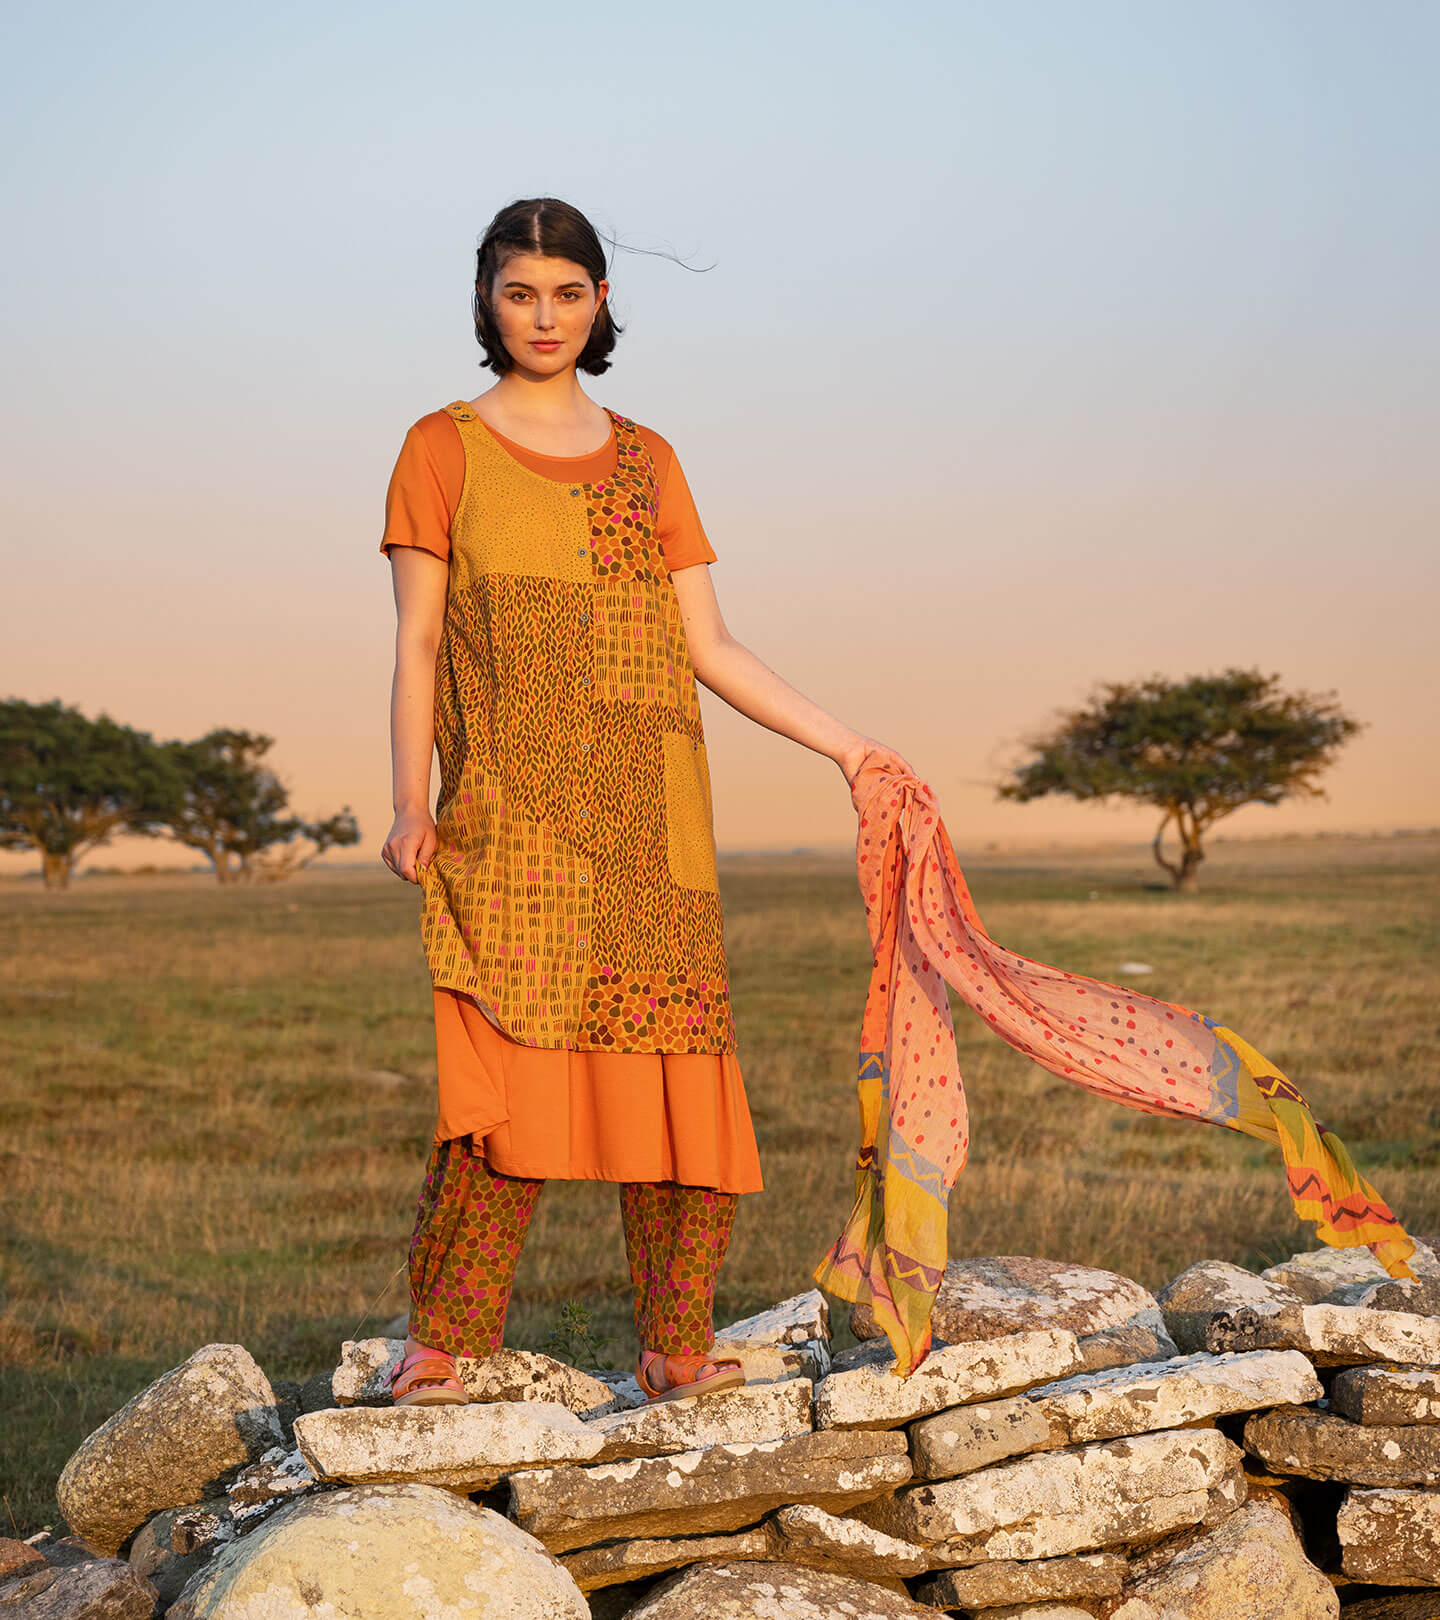 “Earth” dress in woven organic cotton/linen